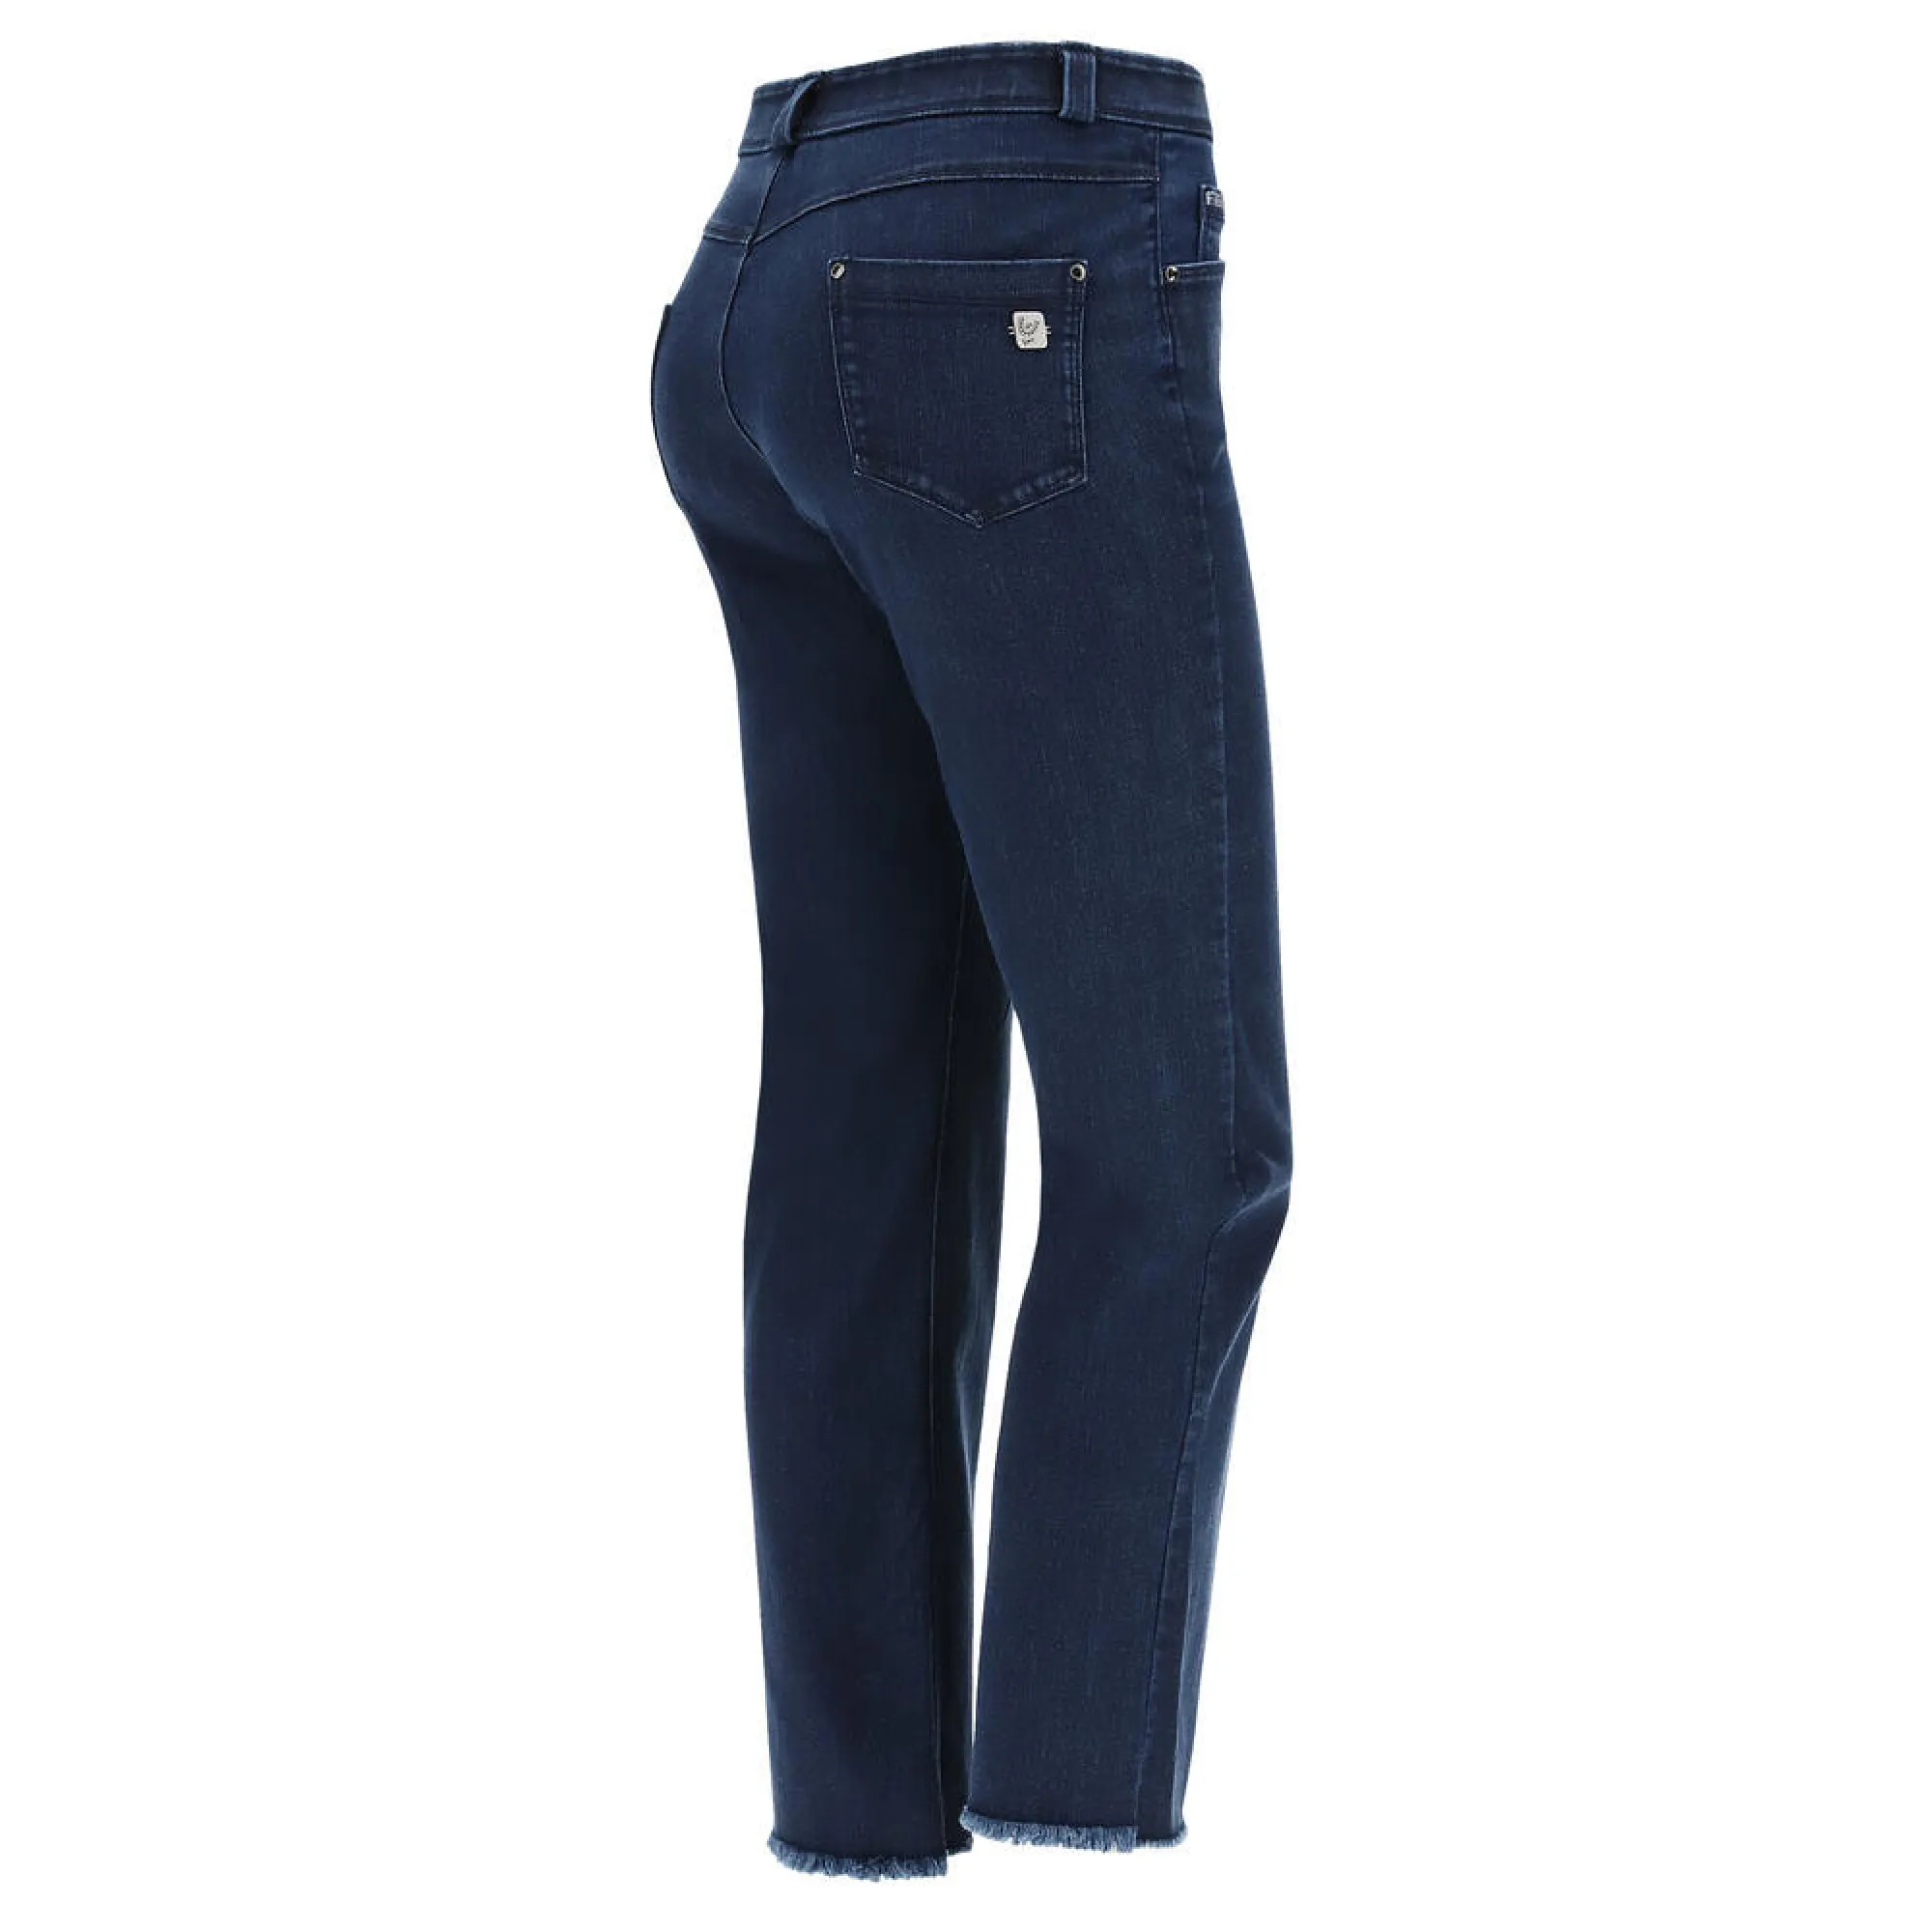 Freddy Fit Jeans - Regular Waist Straight - Cropped - Dark Denim – Blue Seam - J0B